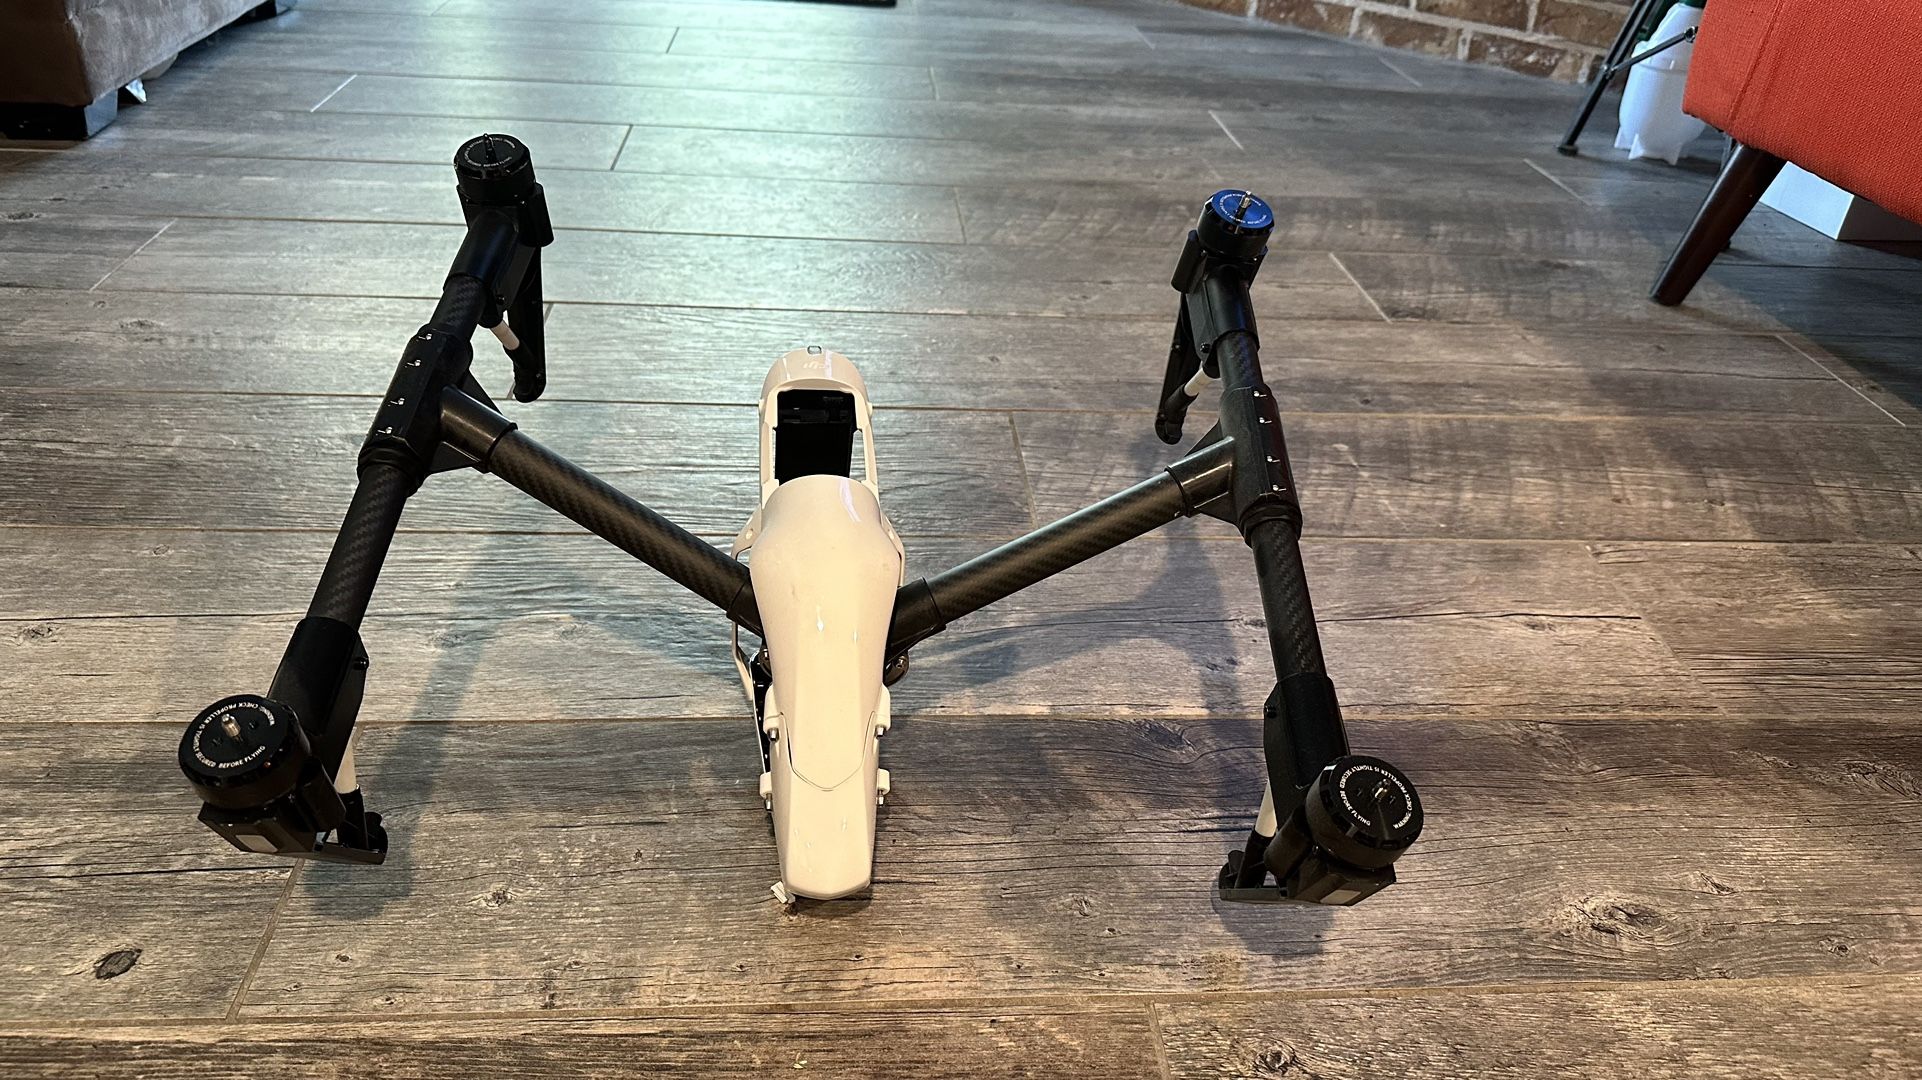 DJI Inspire 1 V.1 Drone For Parts Only + Original Case 